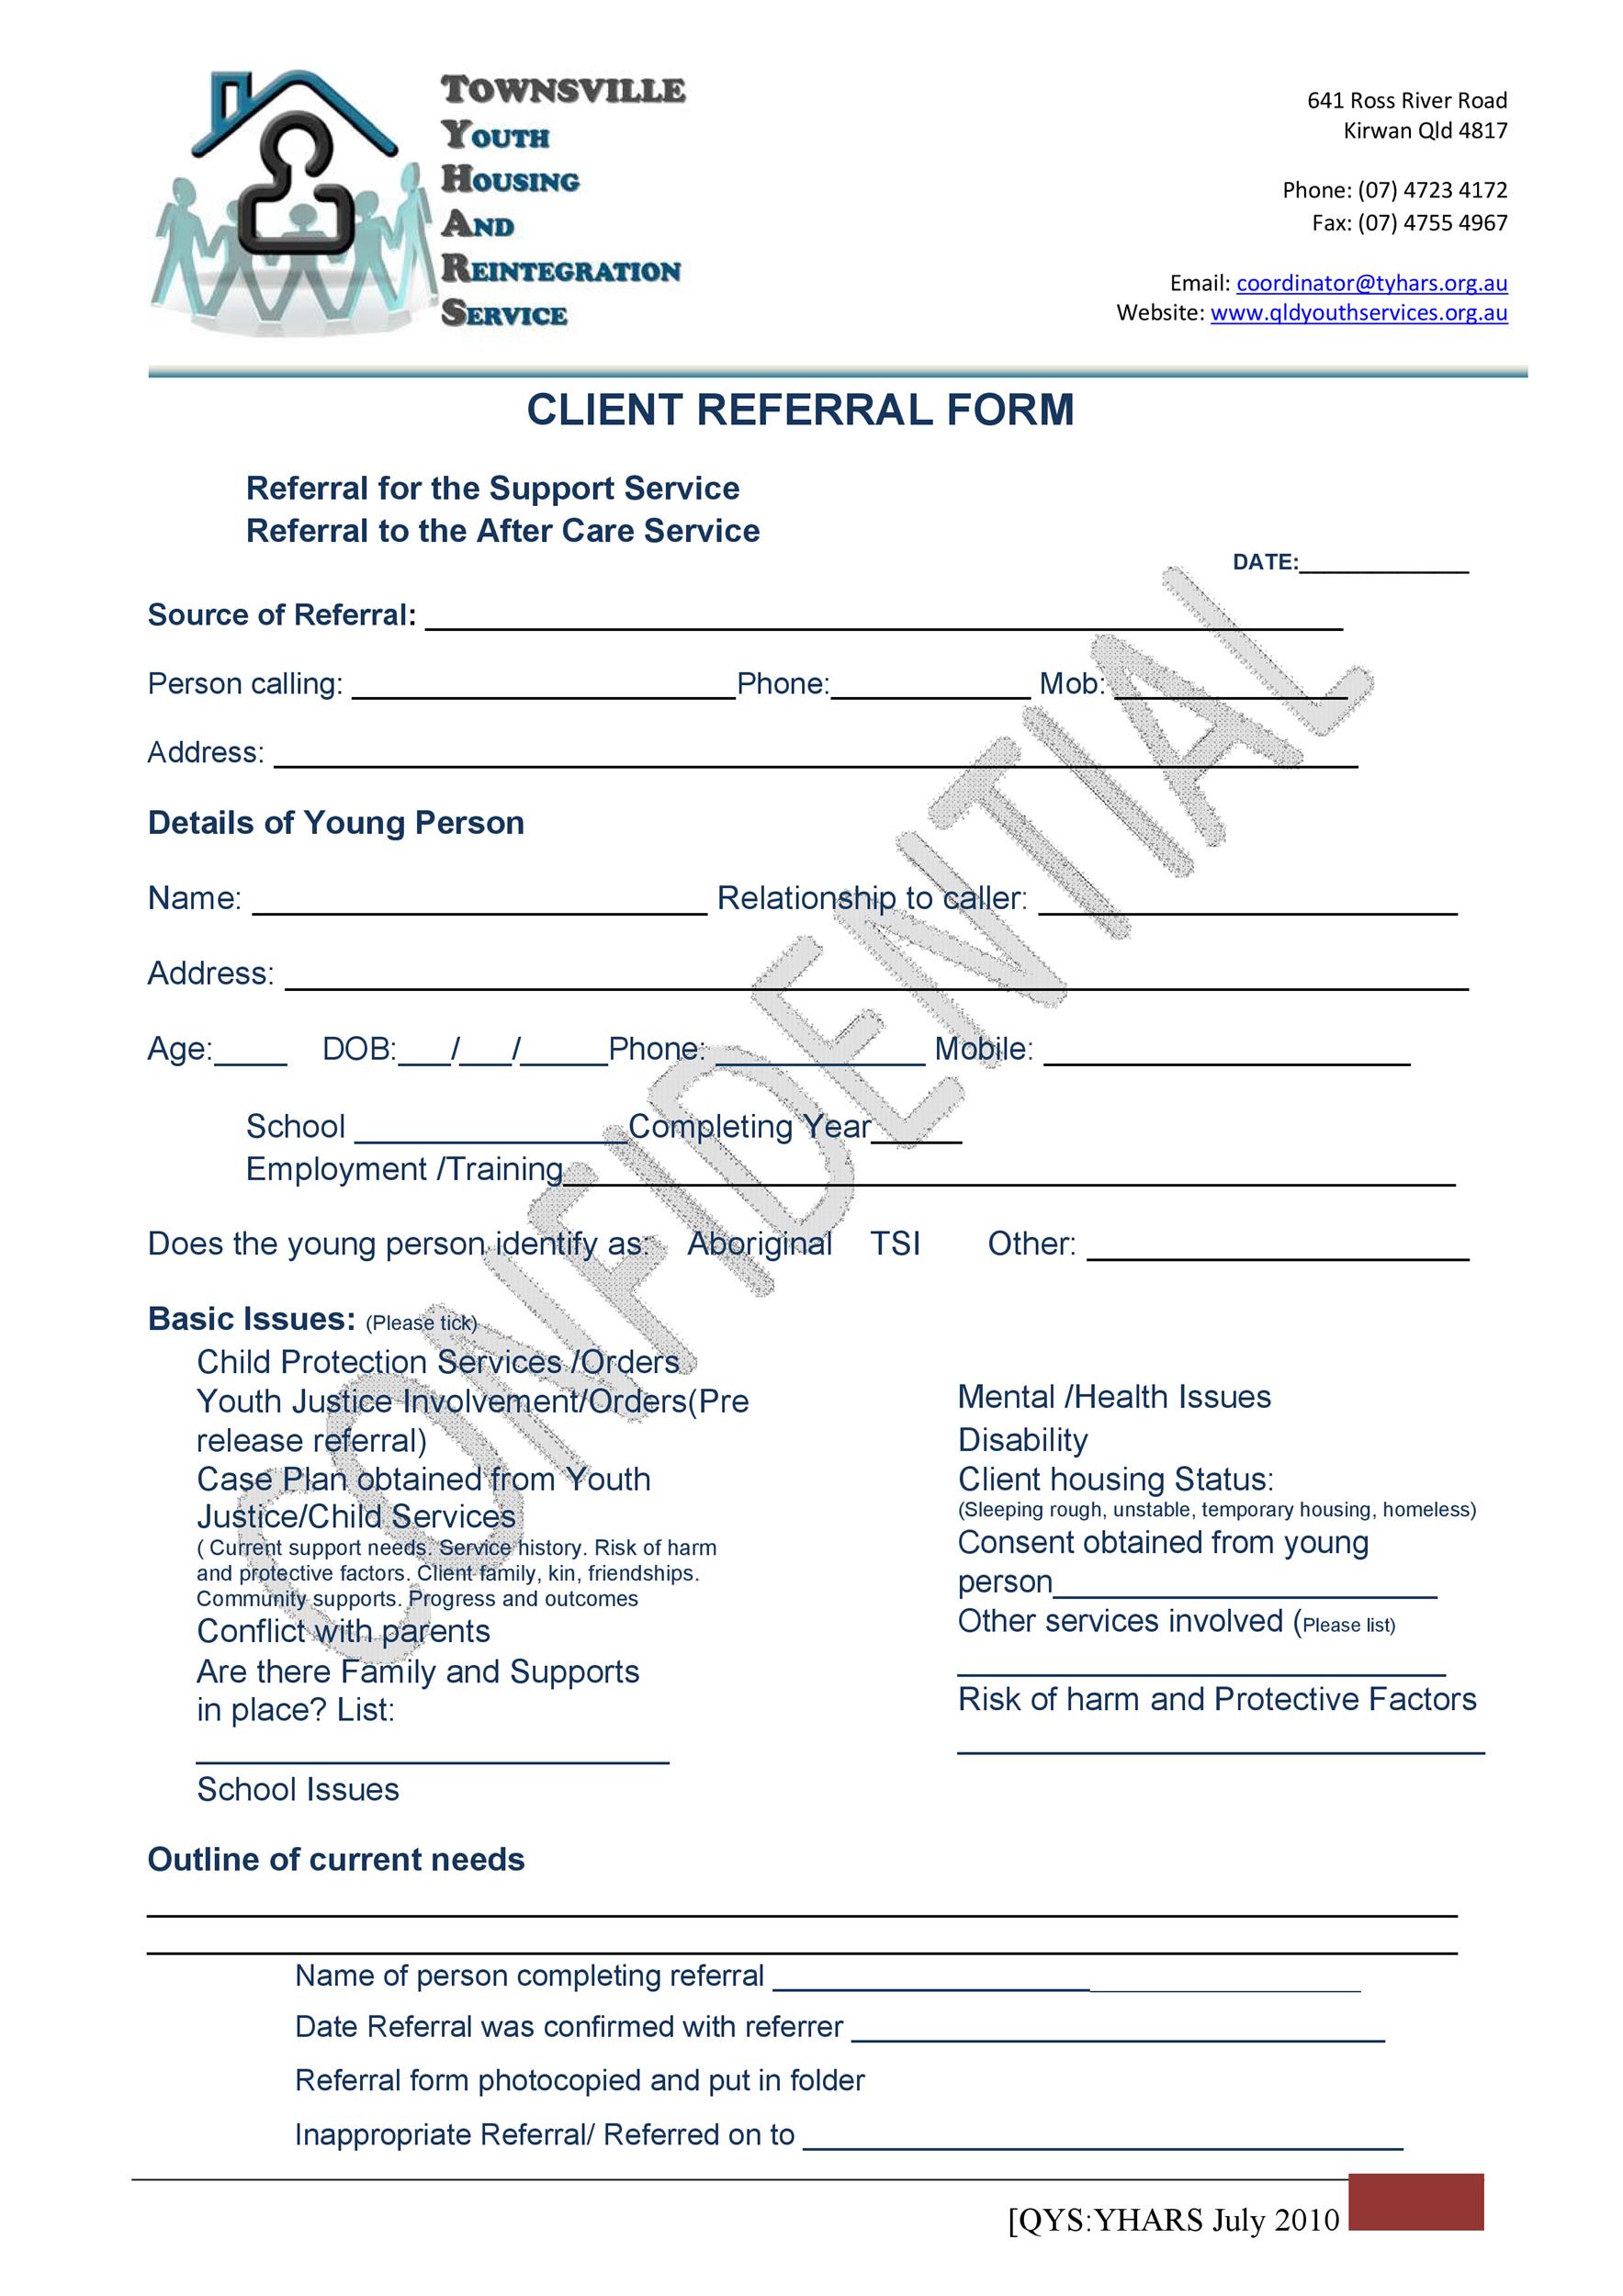 50 Referral Form Templates Medical General ᐅ TemplateLab